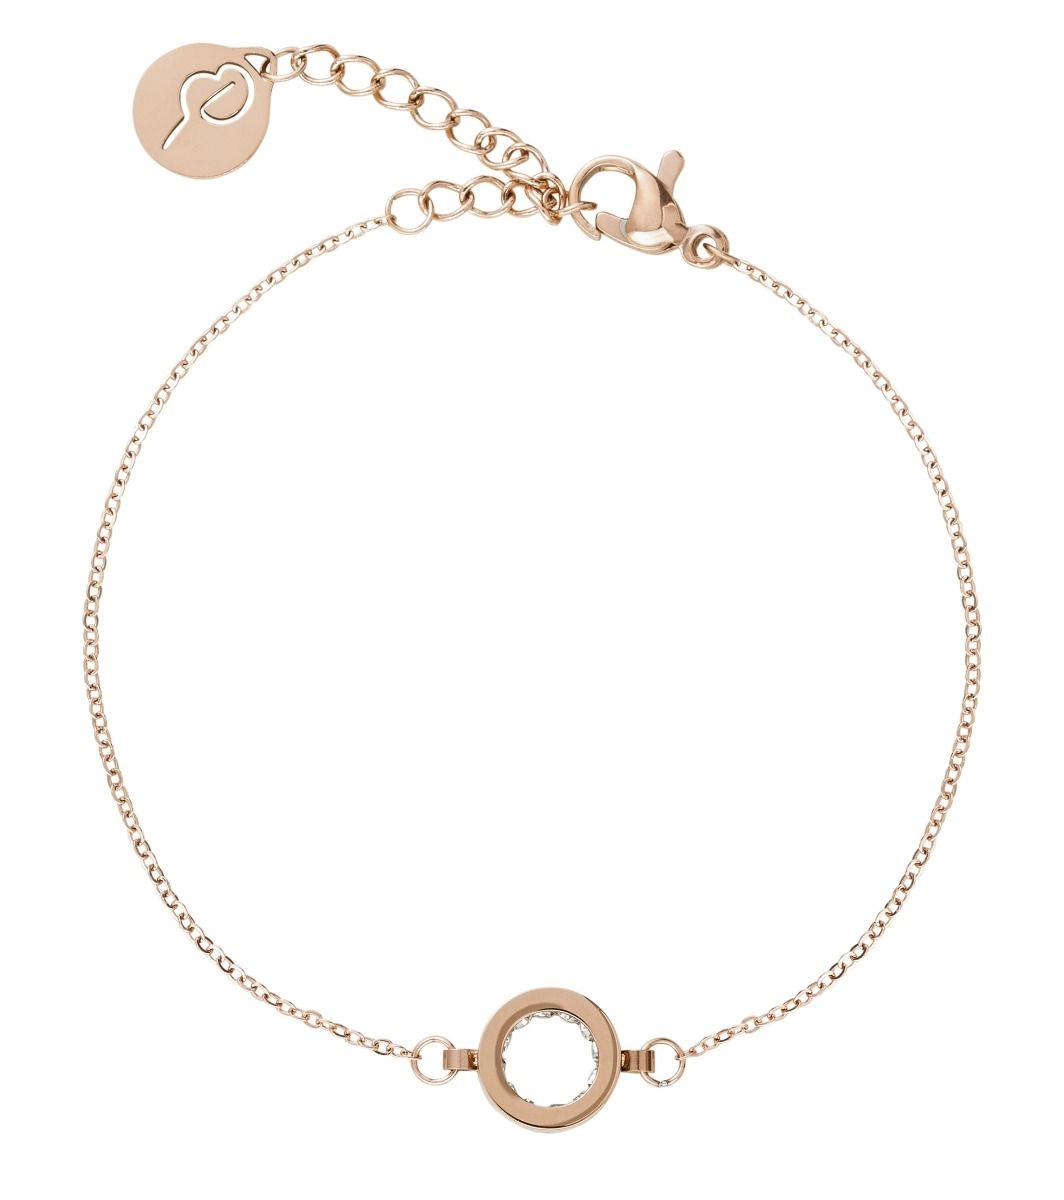 Monaco Bracelet Mini Rose Gold - Edblad - Snabb frakt & paketinslagning - Nordicspectra.se